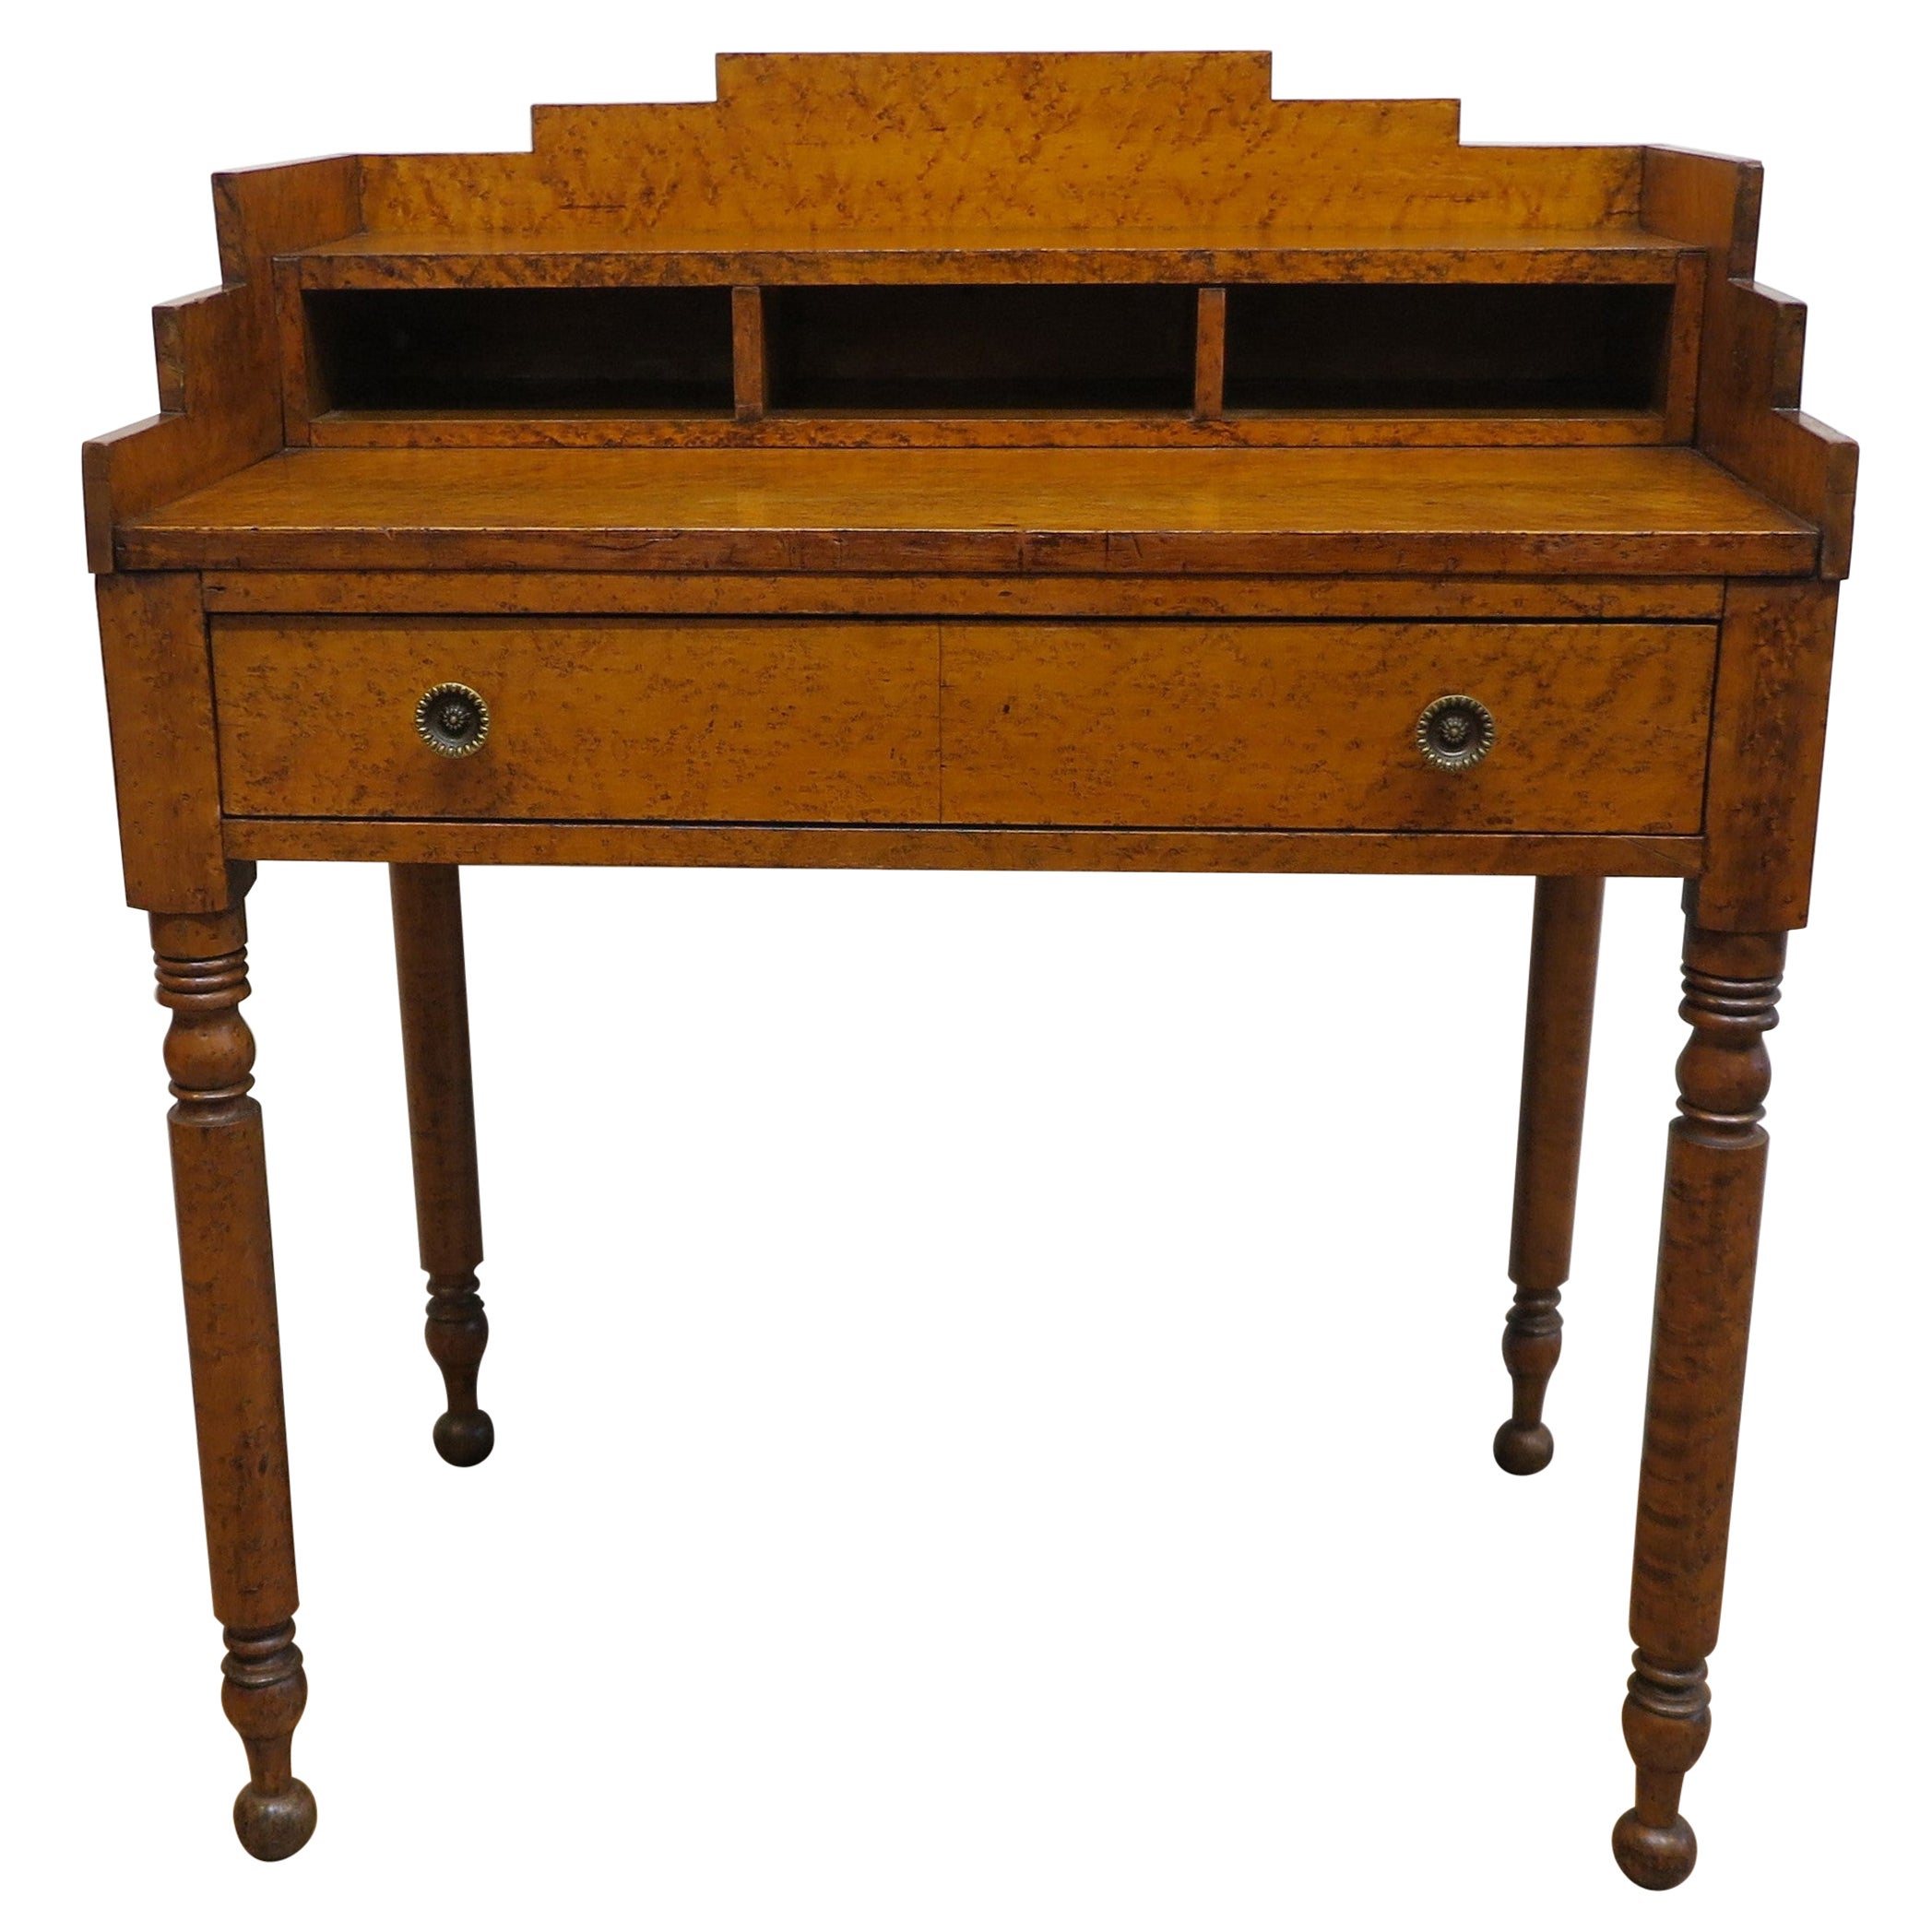 19th Century American Birdseye Maple Desk For Sale